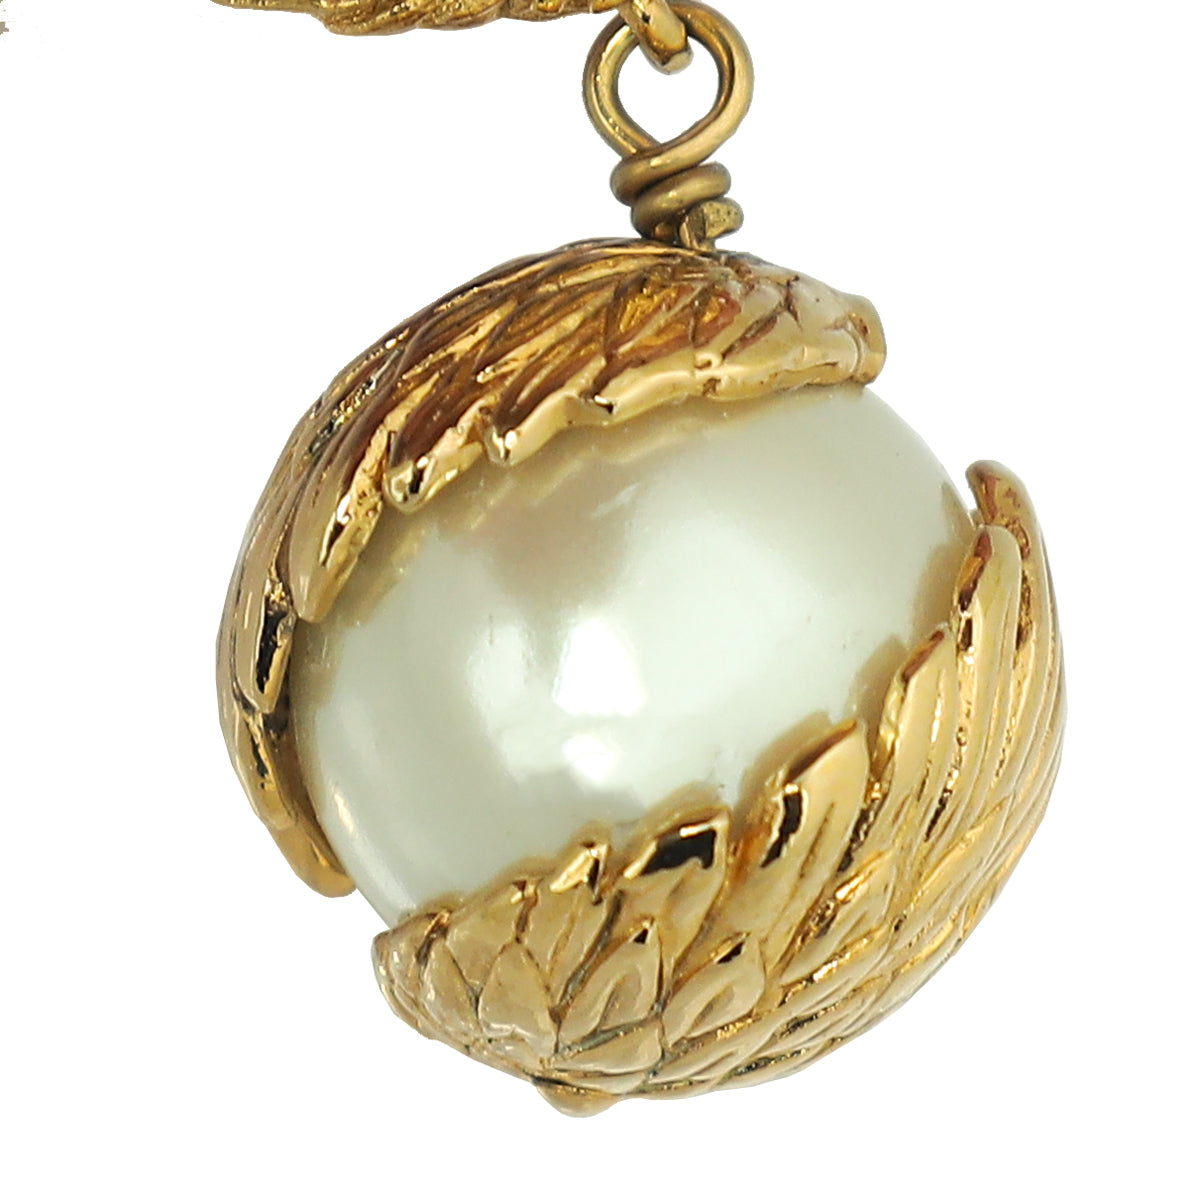 Louis Vuitton Light Gold Angles Dangling Earrings